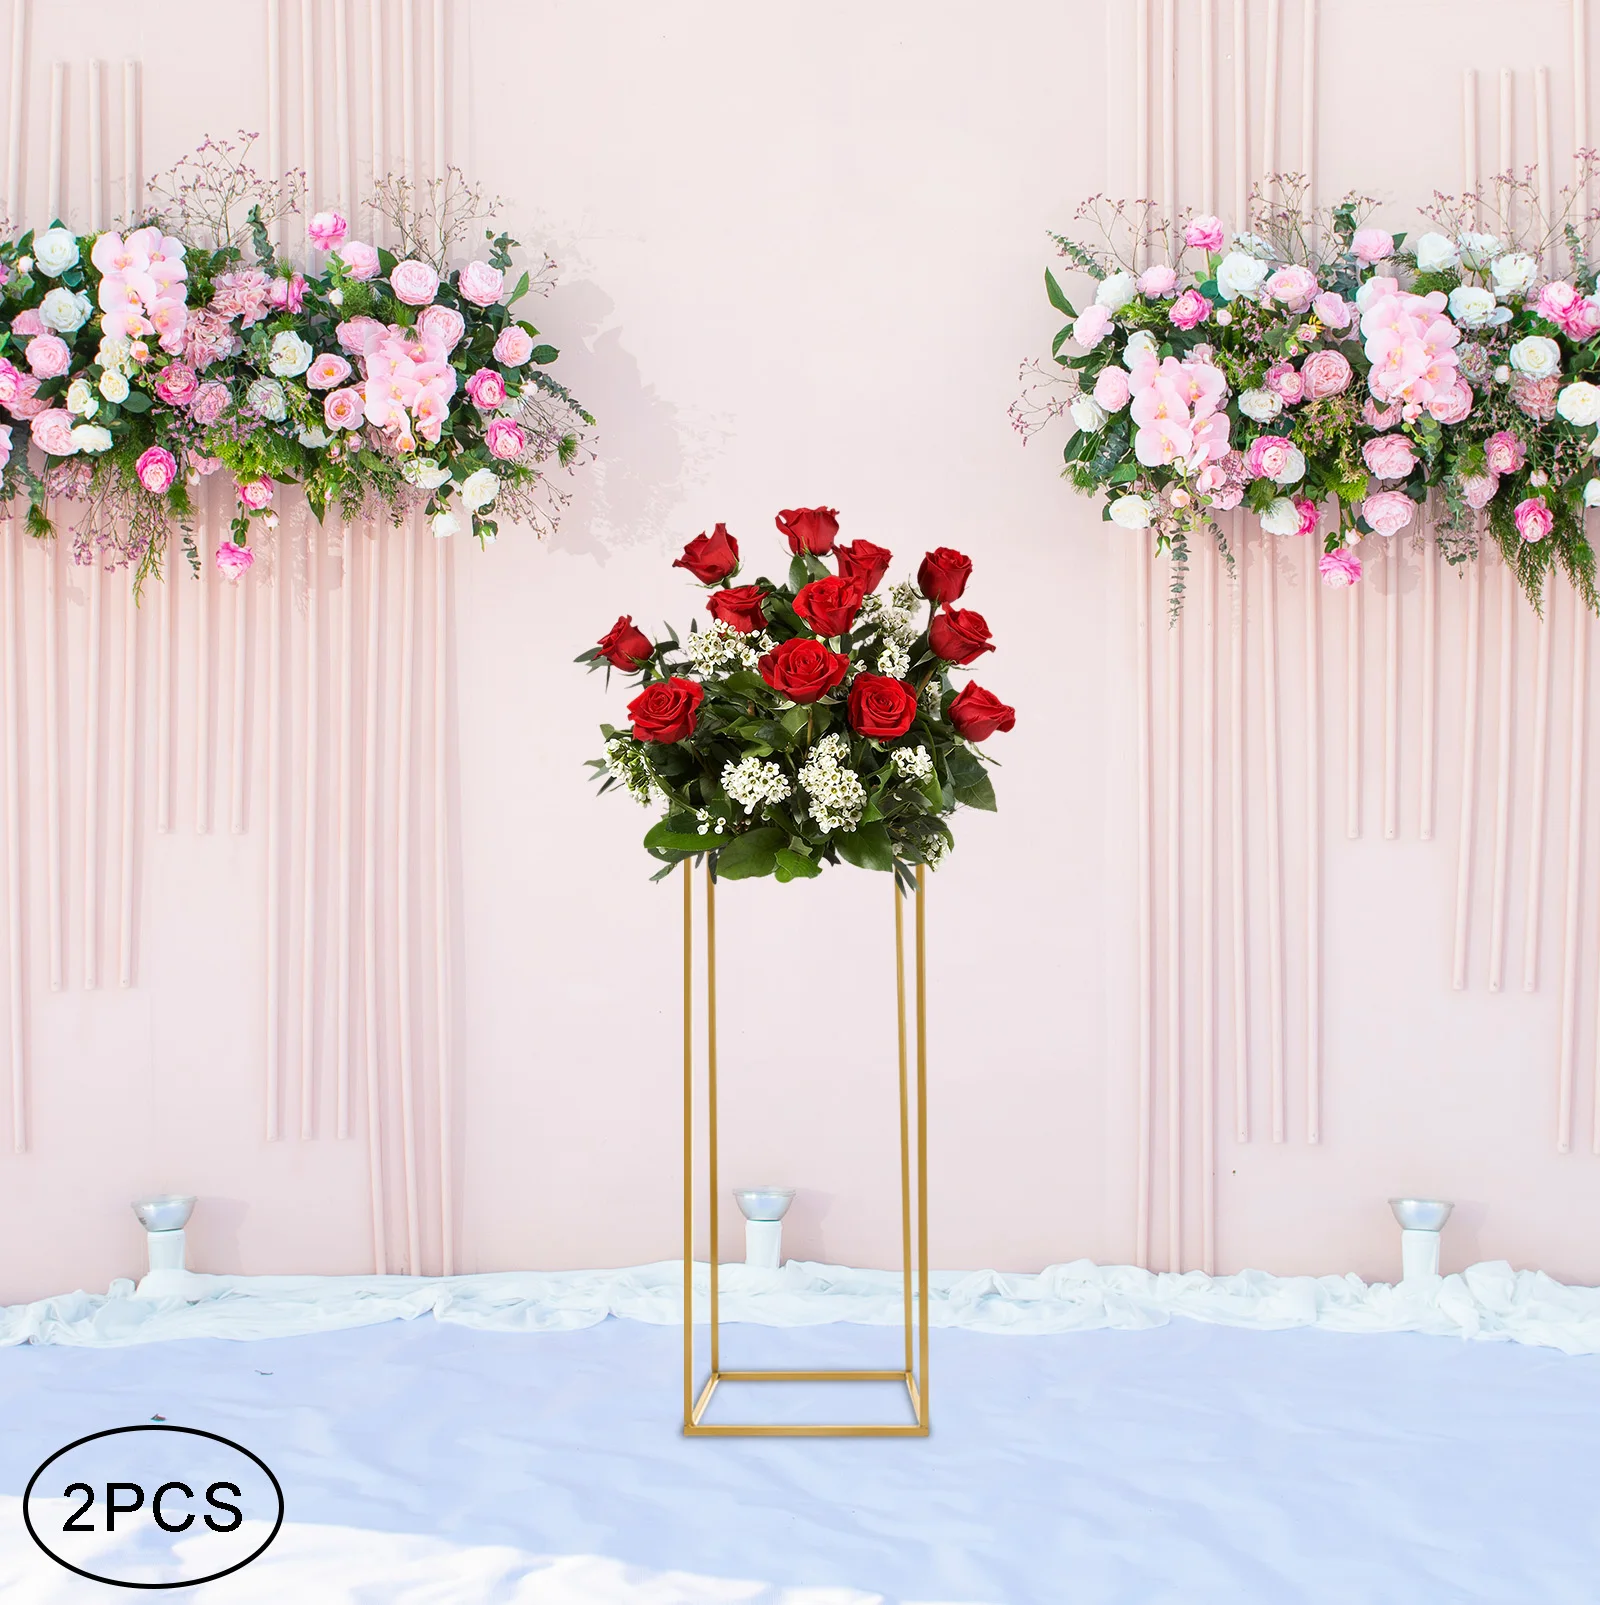 

2PCS DIY Wedding Flower Stand, 31.5in Gold Rectangular Flower Holder for Celebration and cafe balcony garden decor